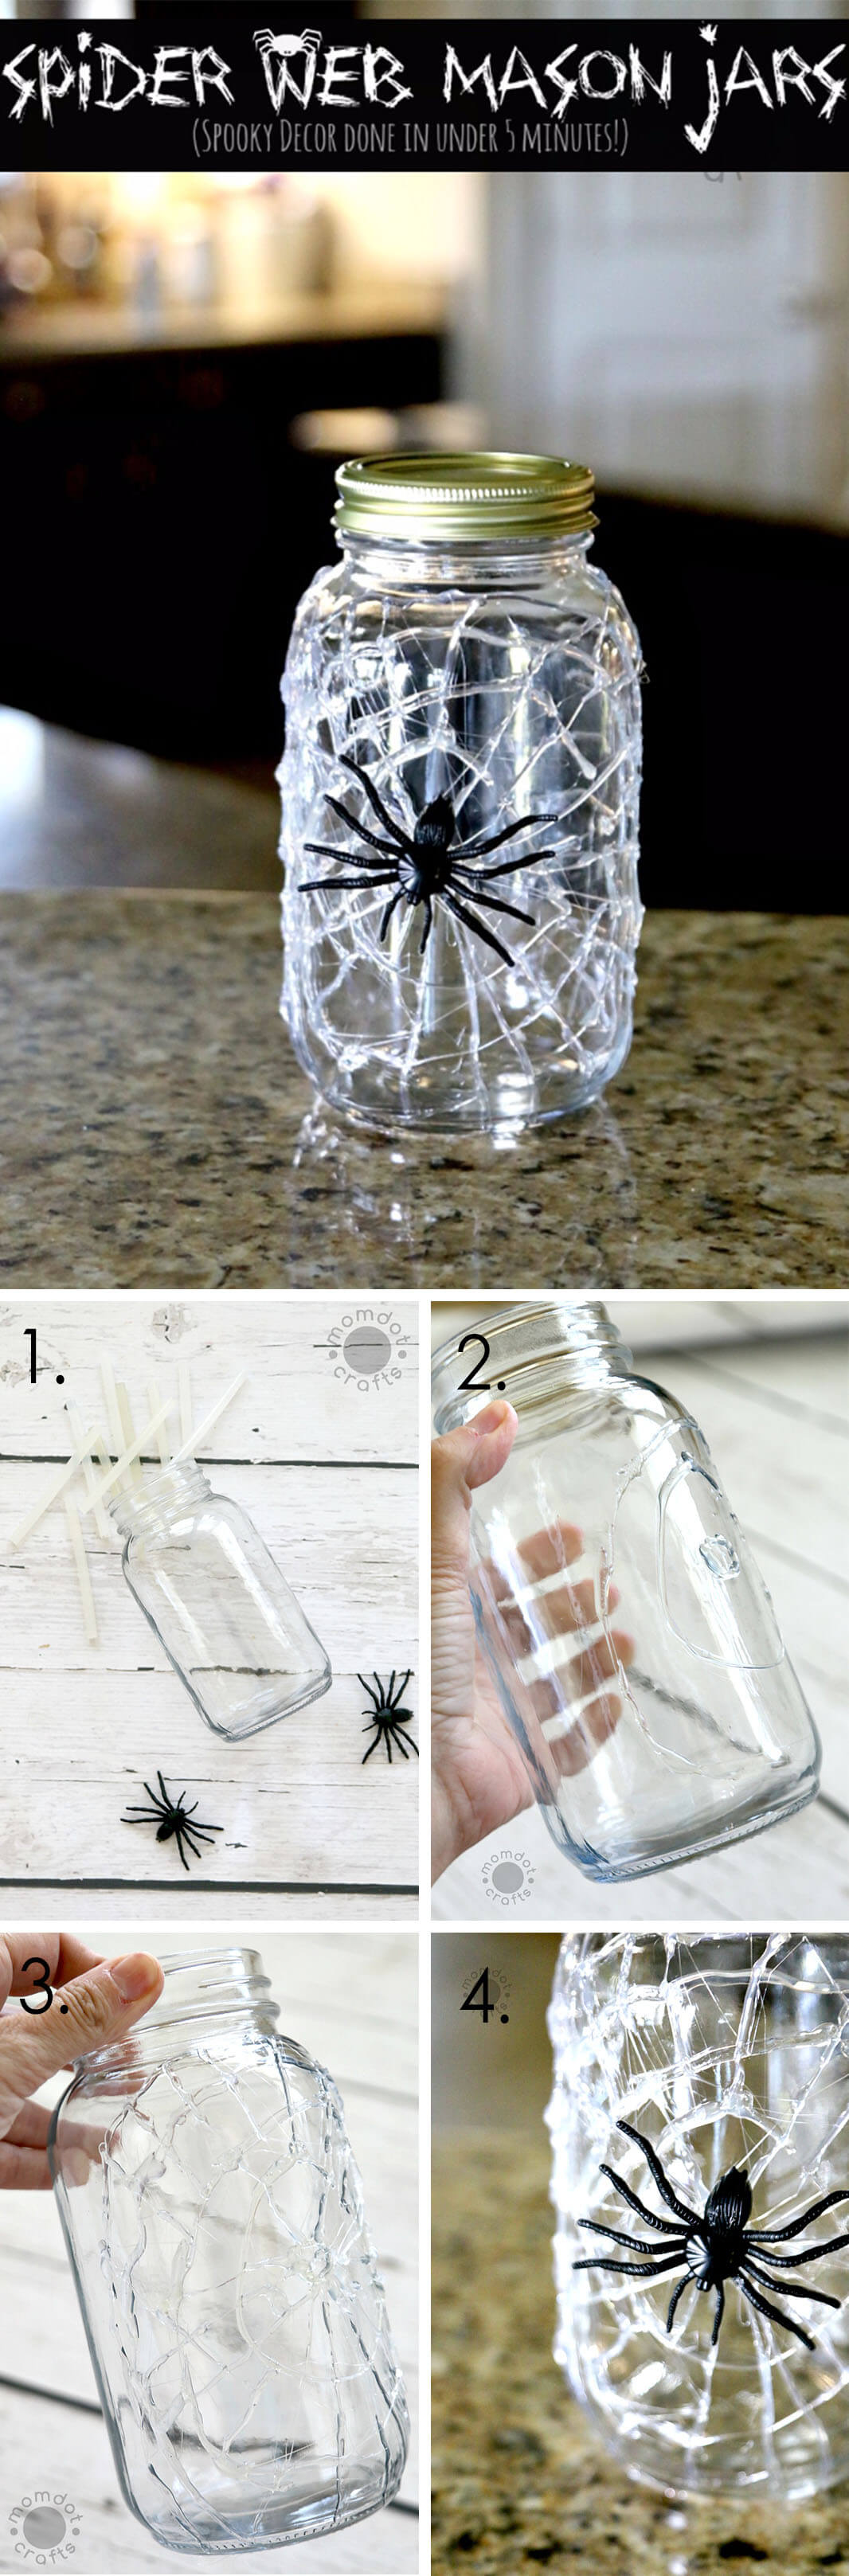 10-Minute Hot Glue Spiderweb Mason Jar